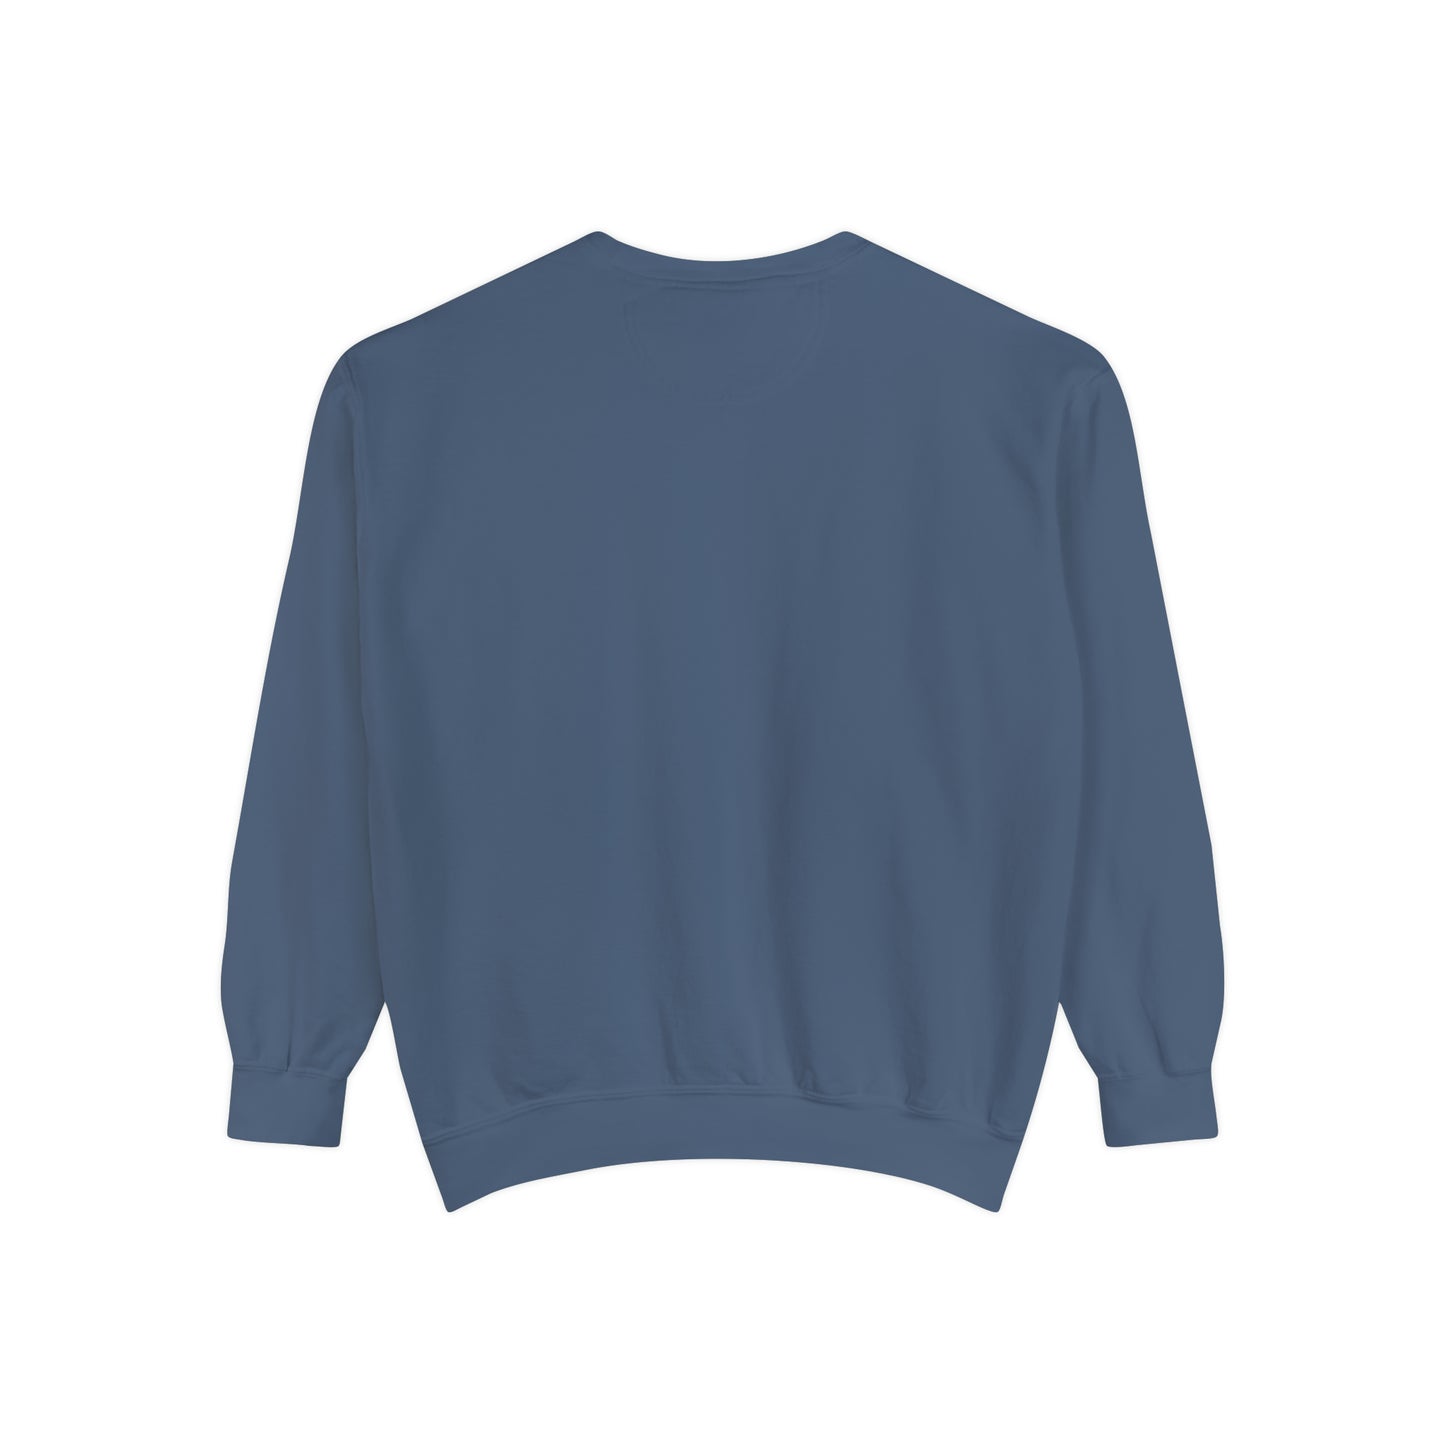 Lucky Comfort Colors Unisex Sweatshirt